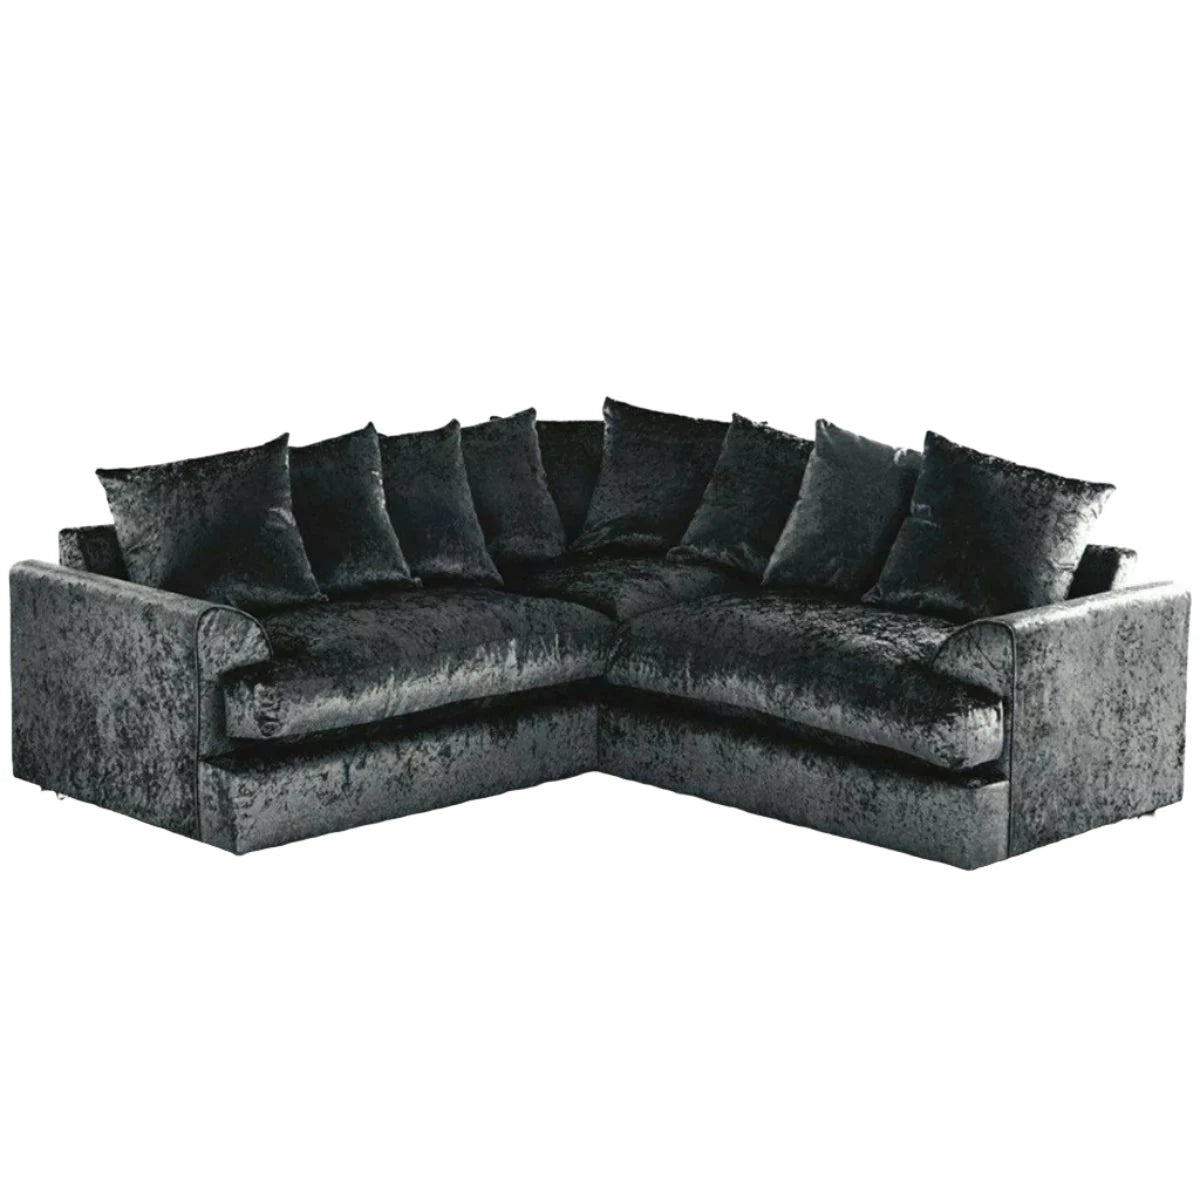 Classic Design Crushed Velvet 3+2 Sofas - Silver or Black